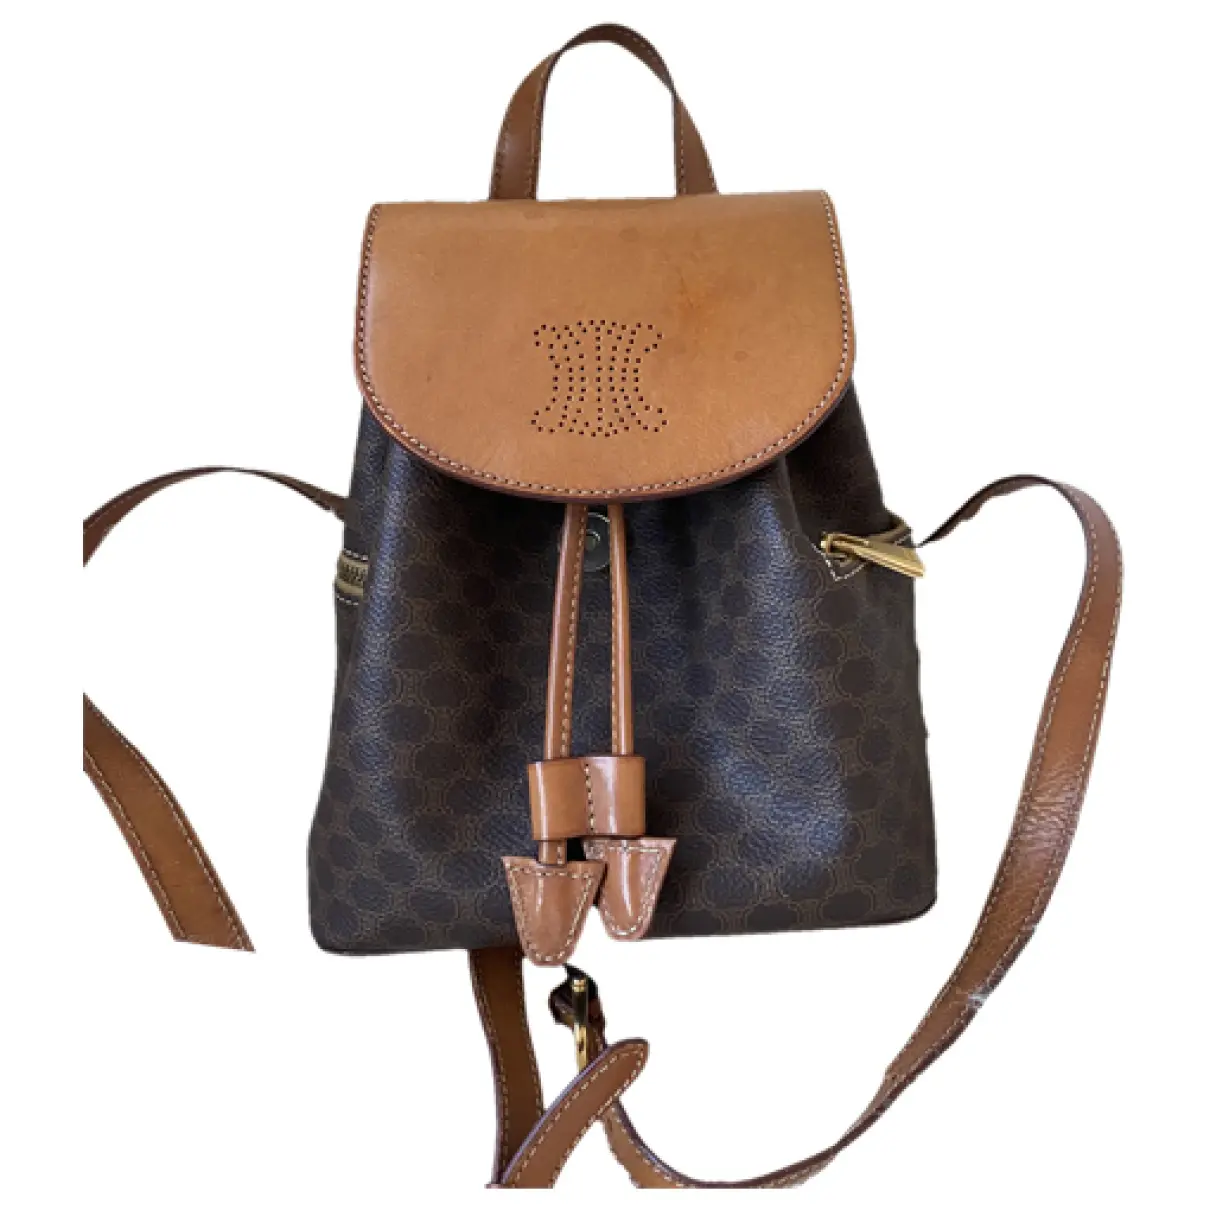 Folco leather backpack Celine